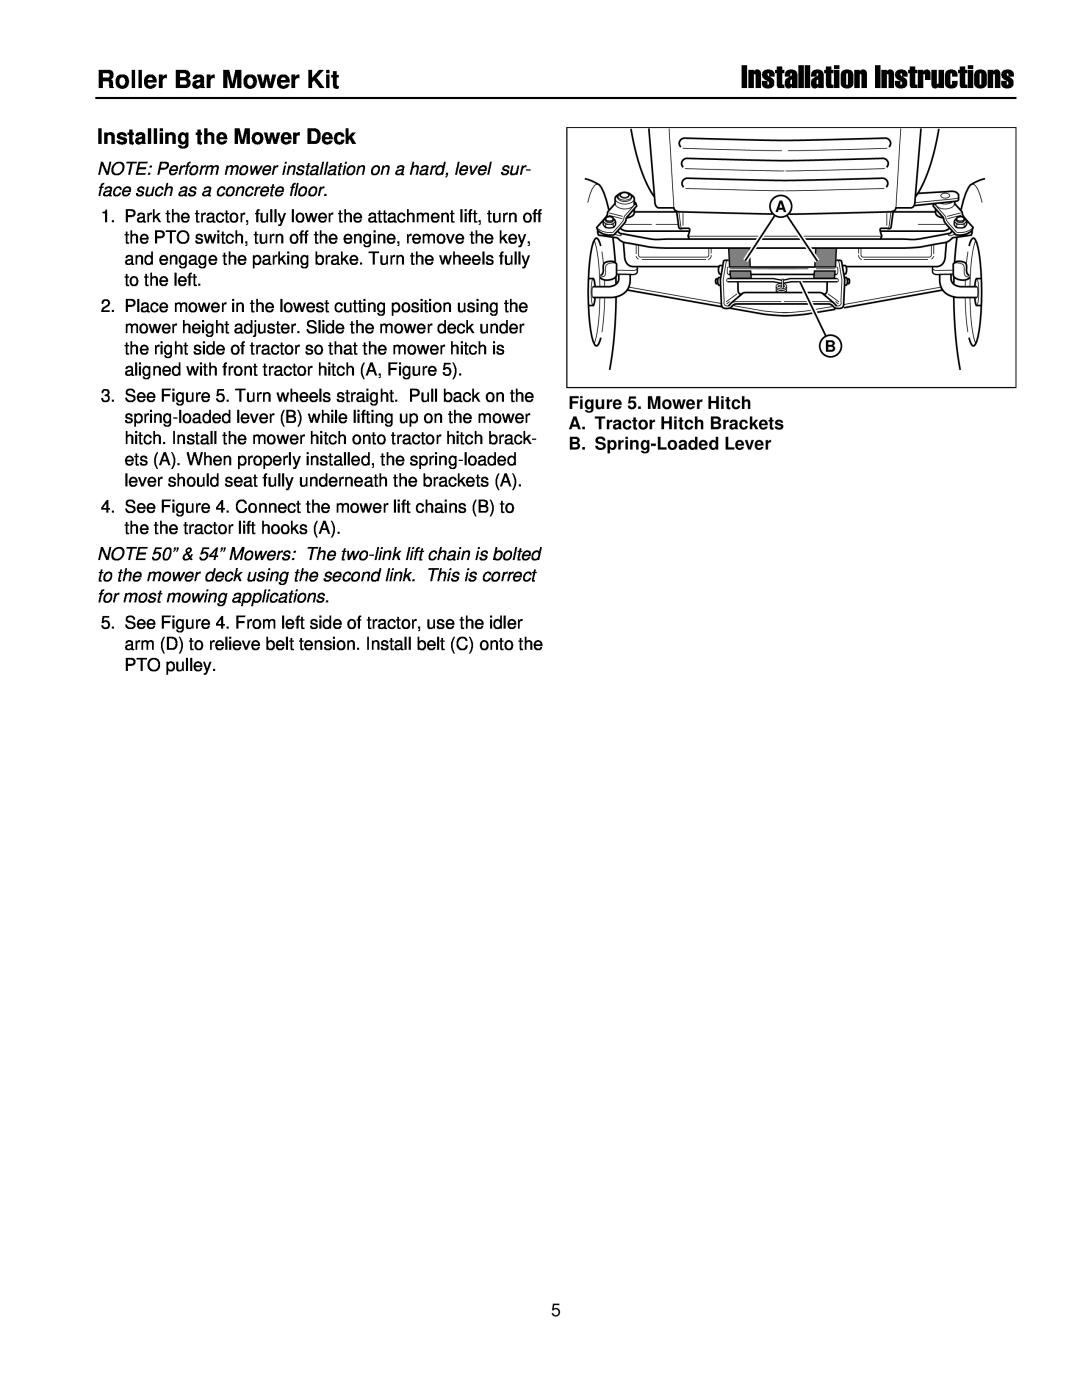 Briggs & Stratton 1687077 Roller Bar Mower Kit, Installing the Mower Deck, Installation Instructions 